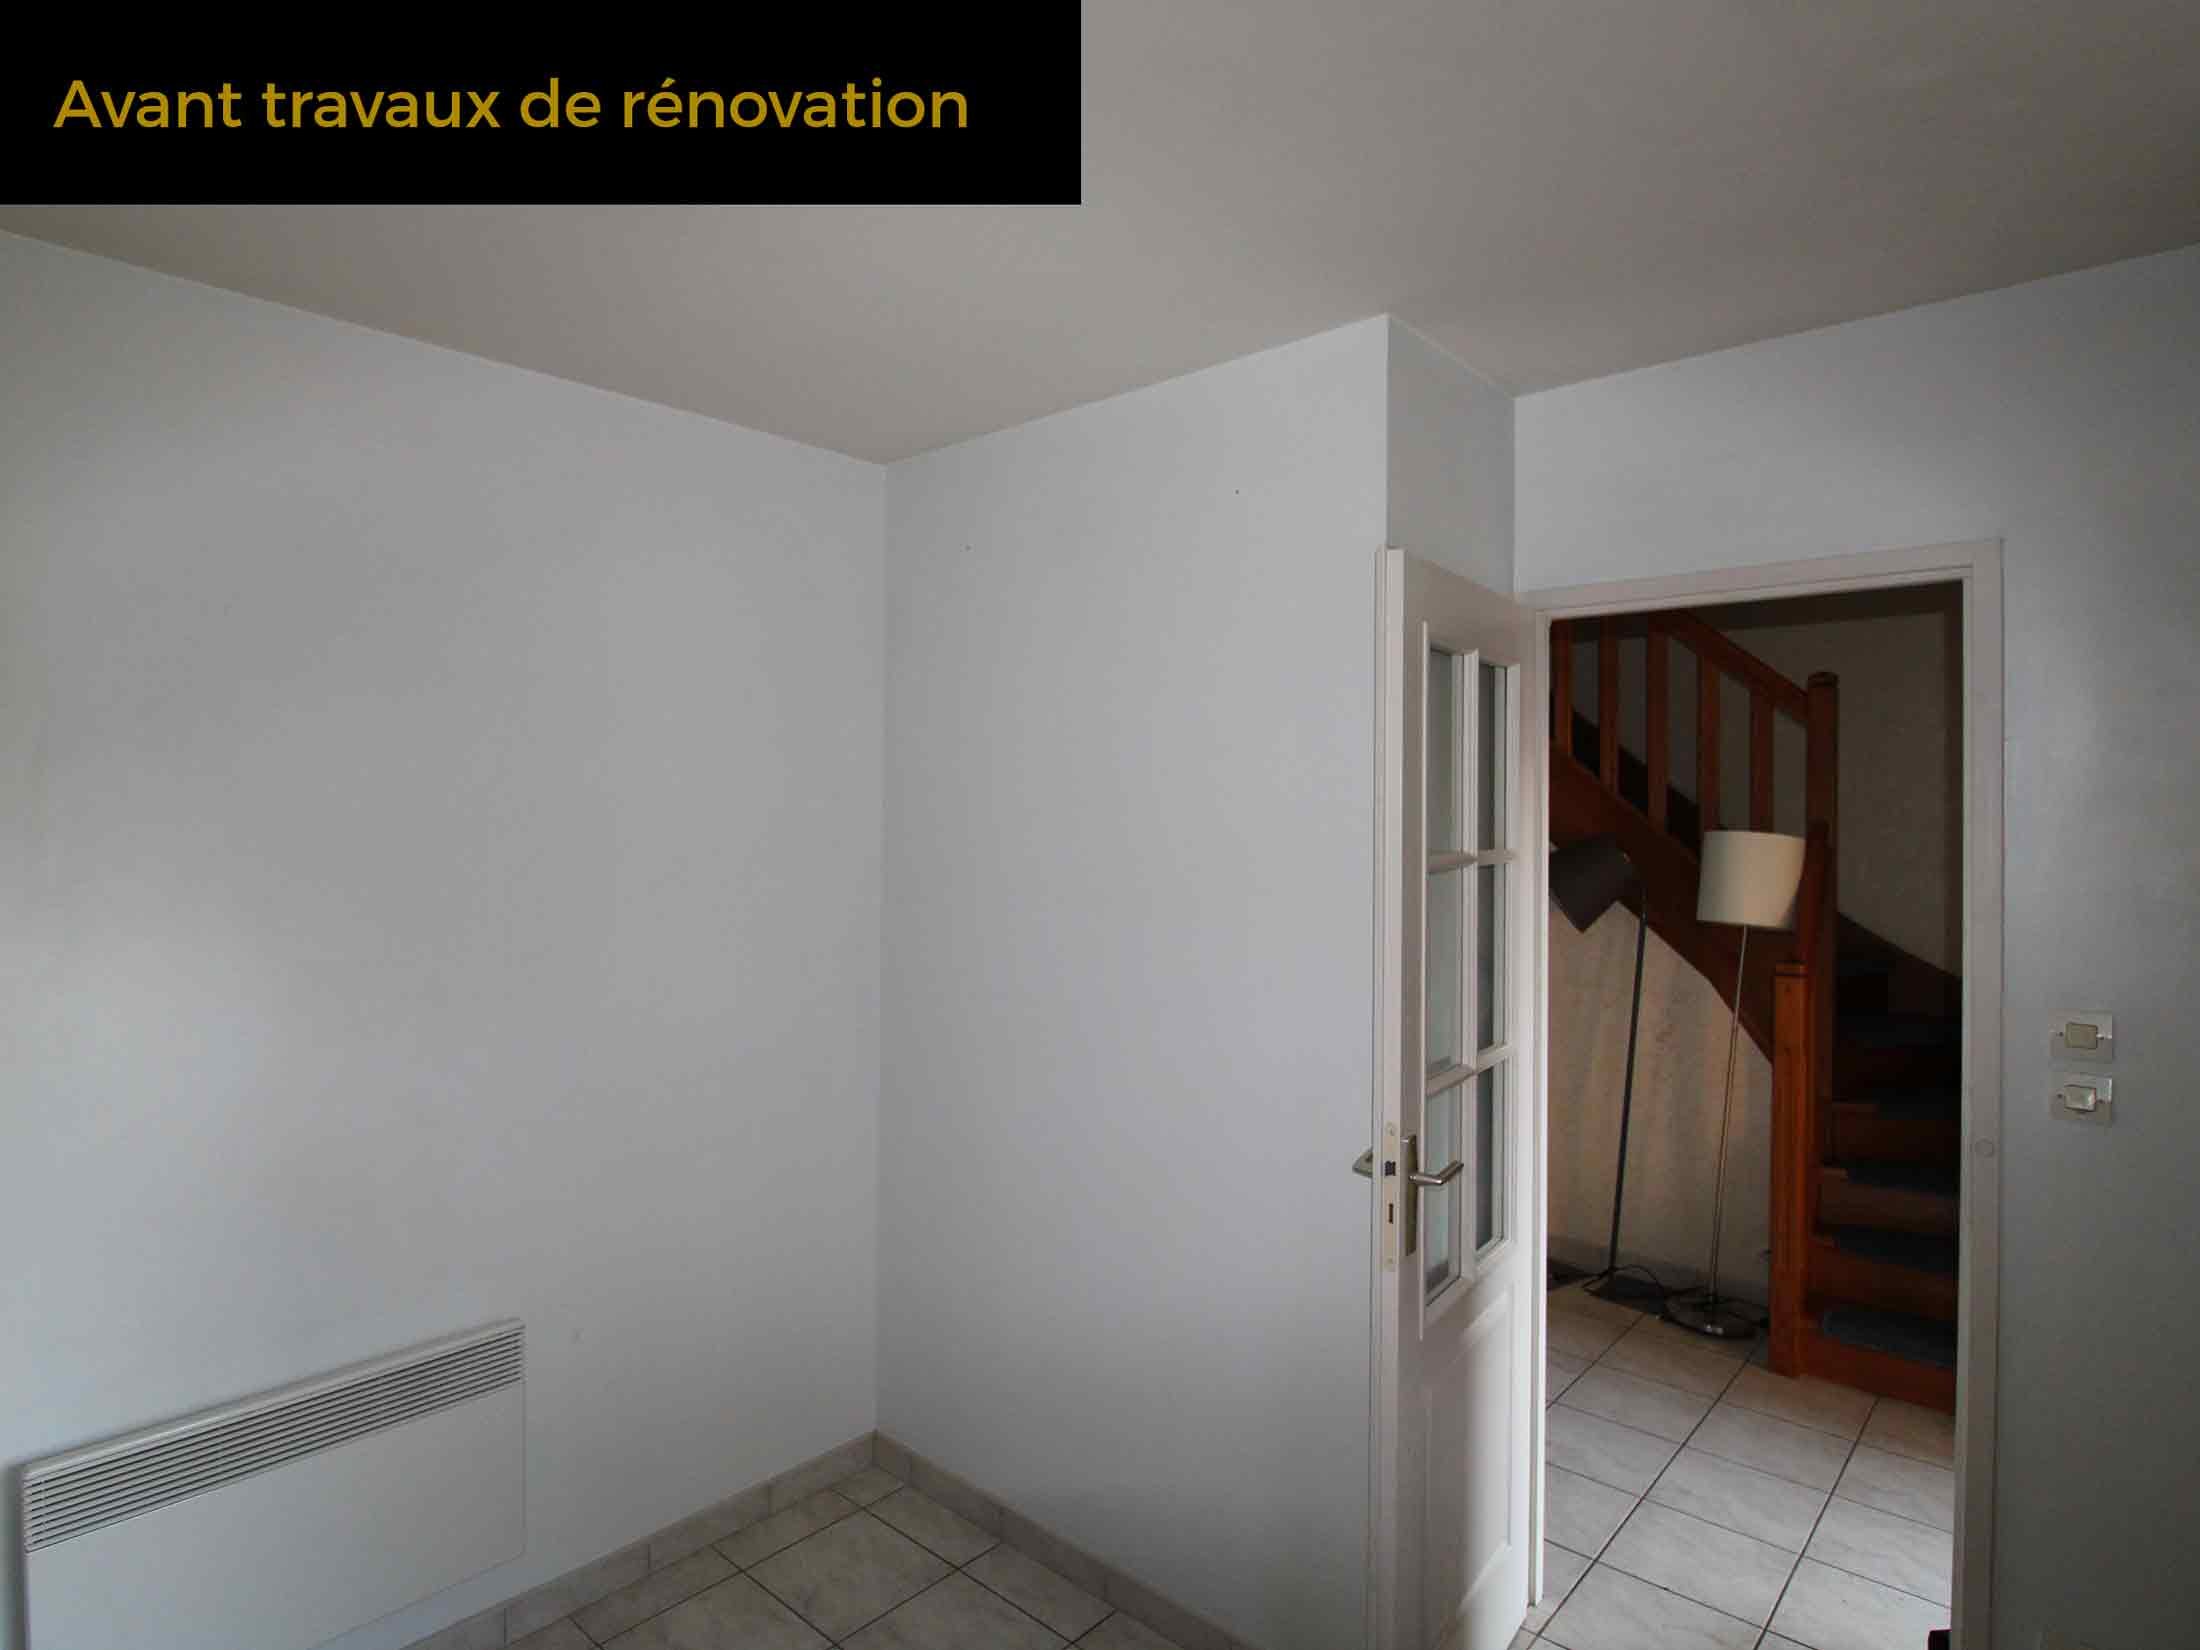 8a-renovation-maison-champagne